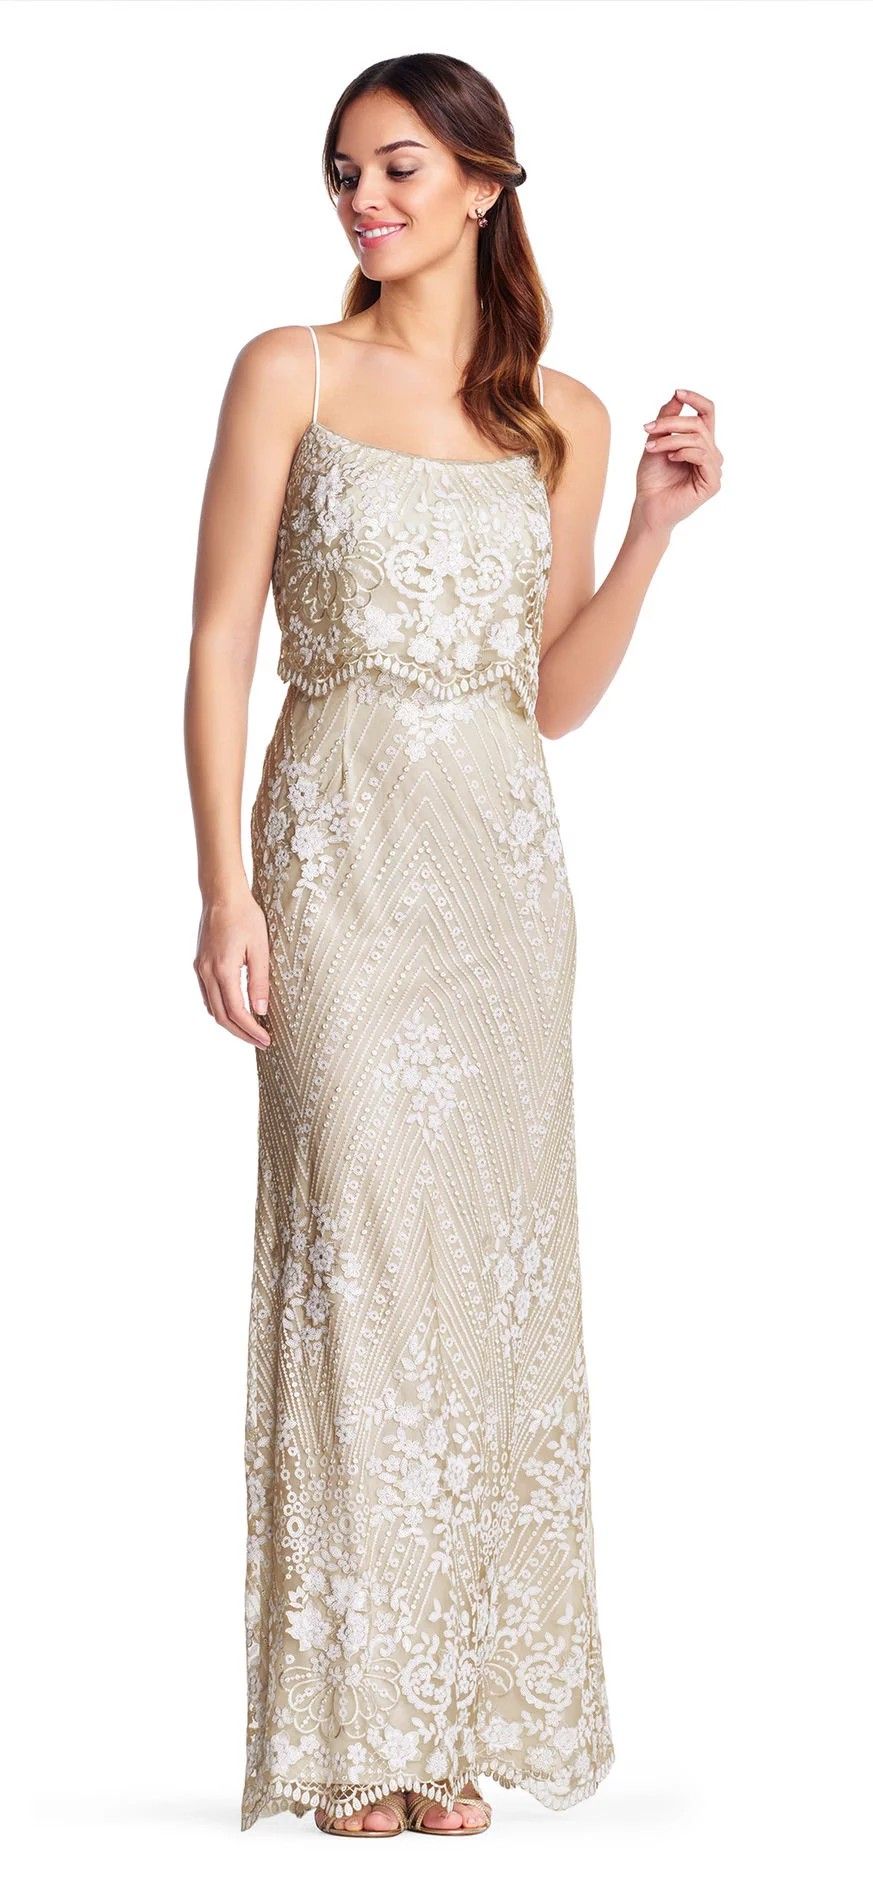 (Unworn) Adrianna Papell/BHLDN Arden Dress - embroidered sequin dress - wedding prom formal gown